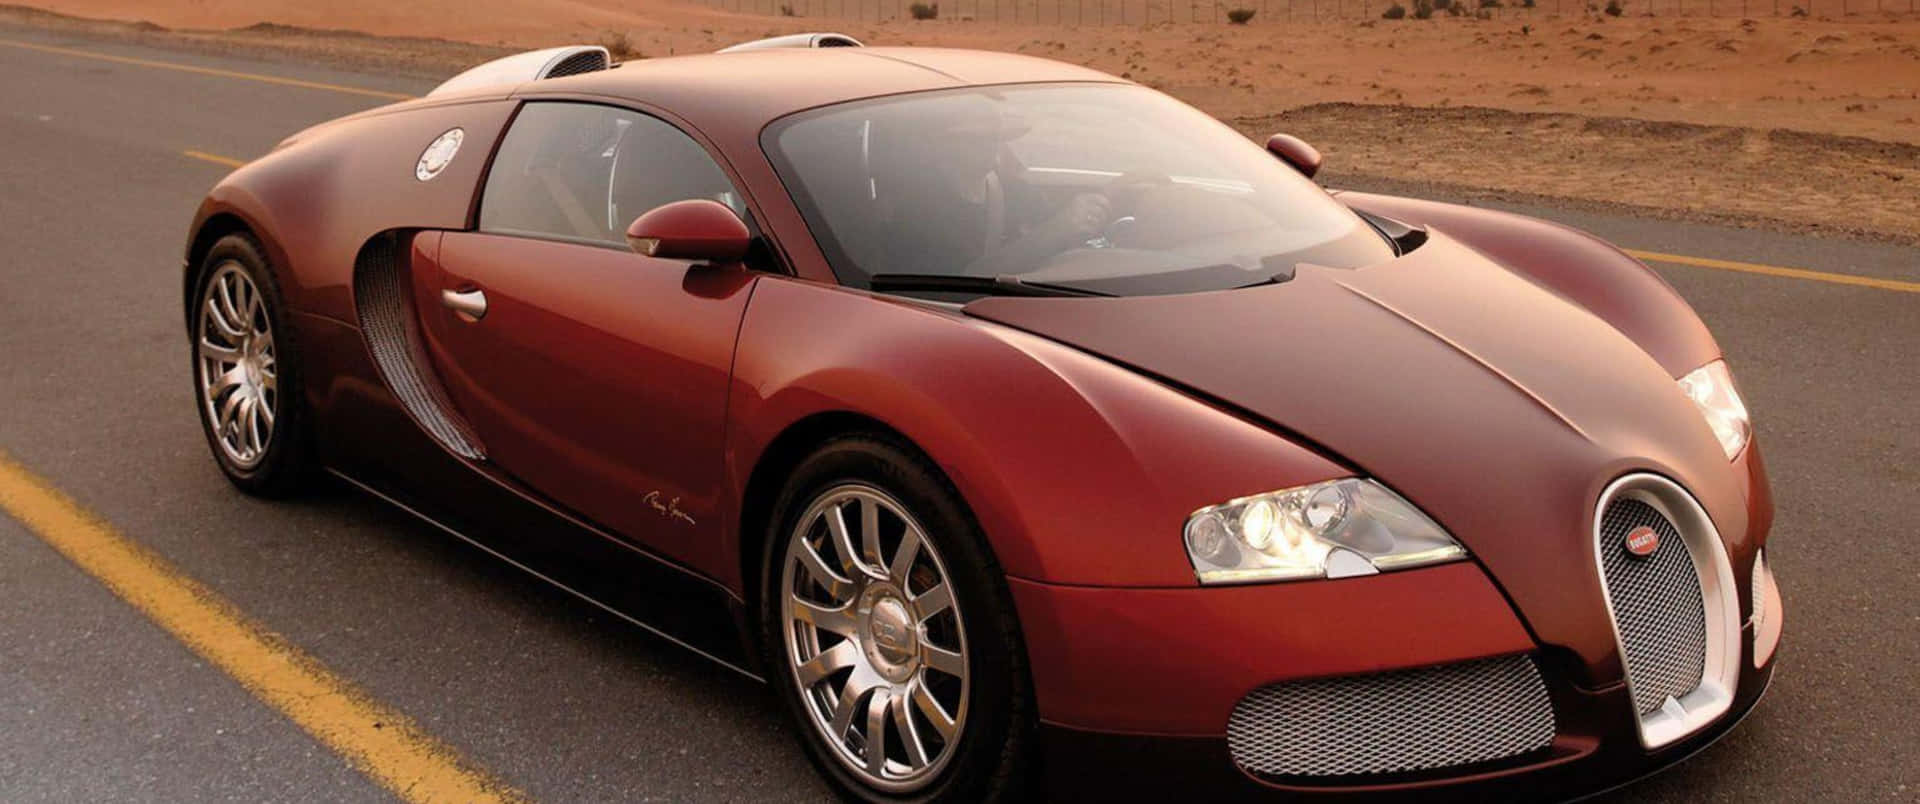 Take a Look Inside the Luxurious Bugatti